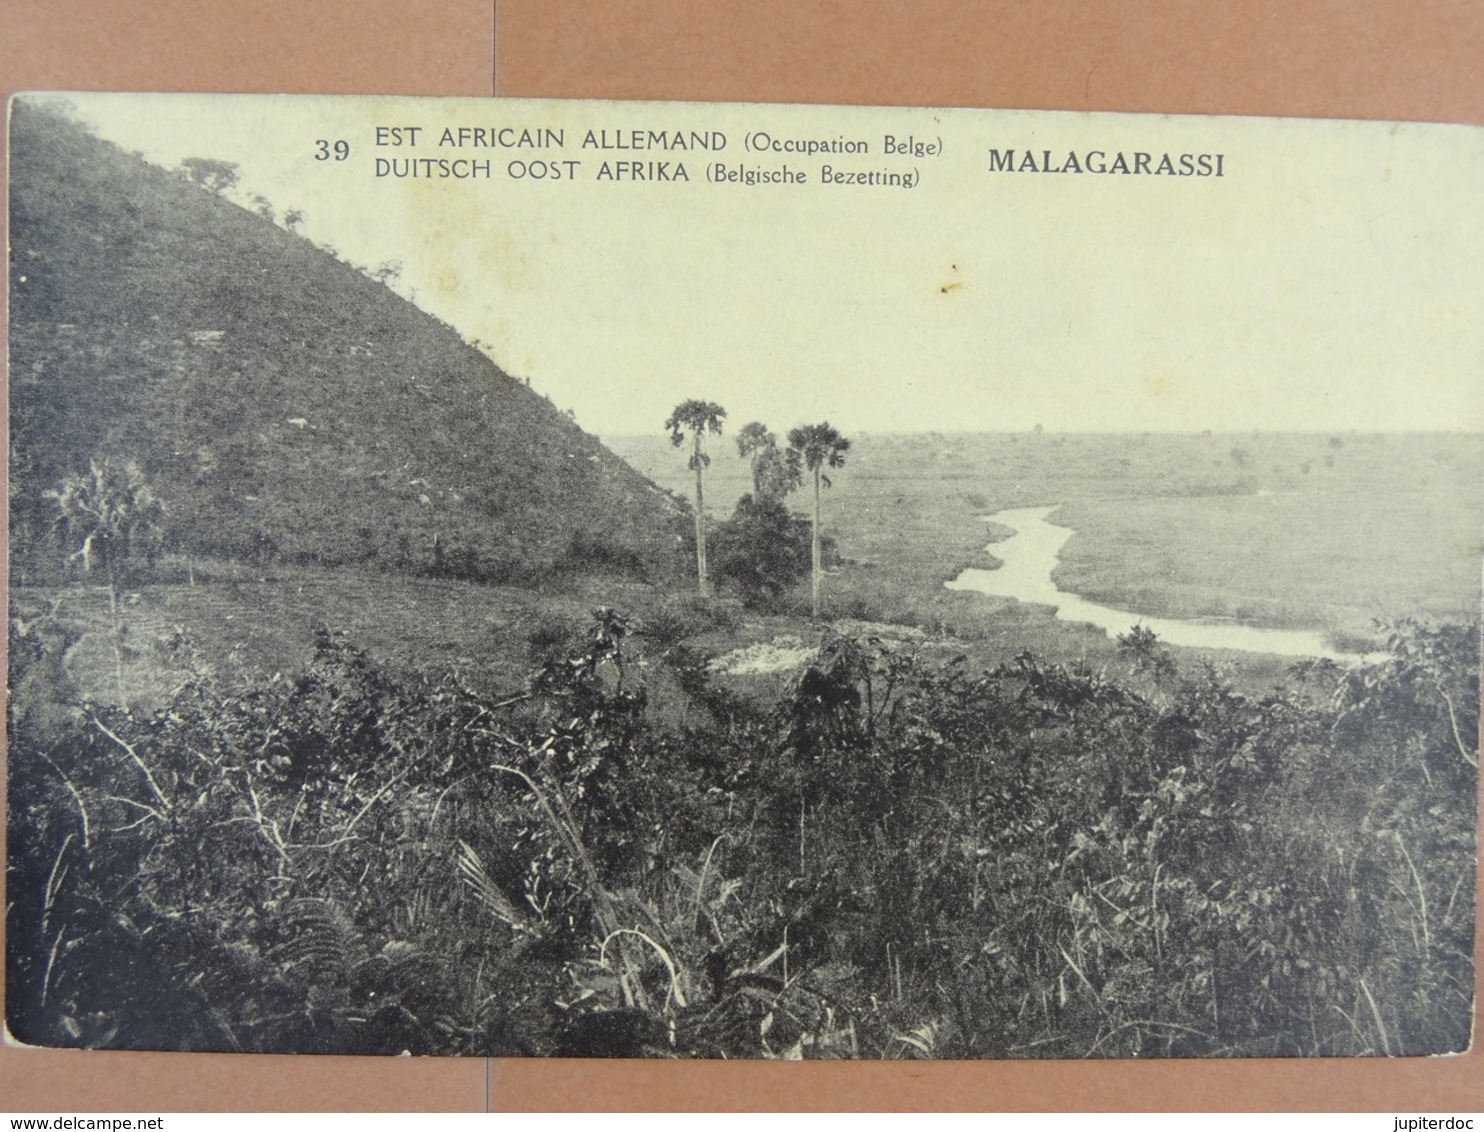 Entier Postal Est-Africain Allemand Malagarassi - Belgian Congo